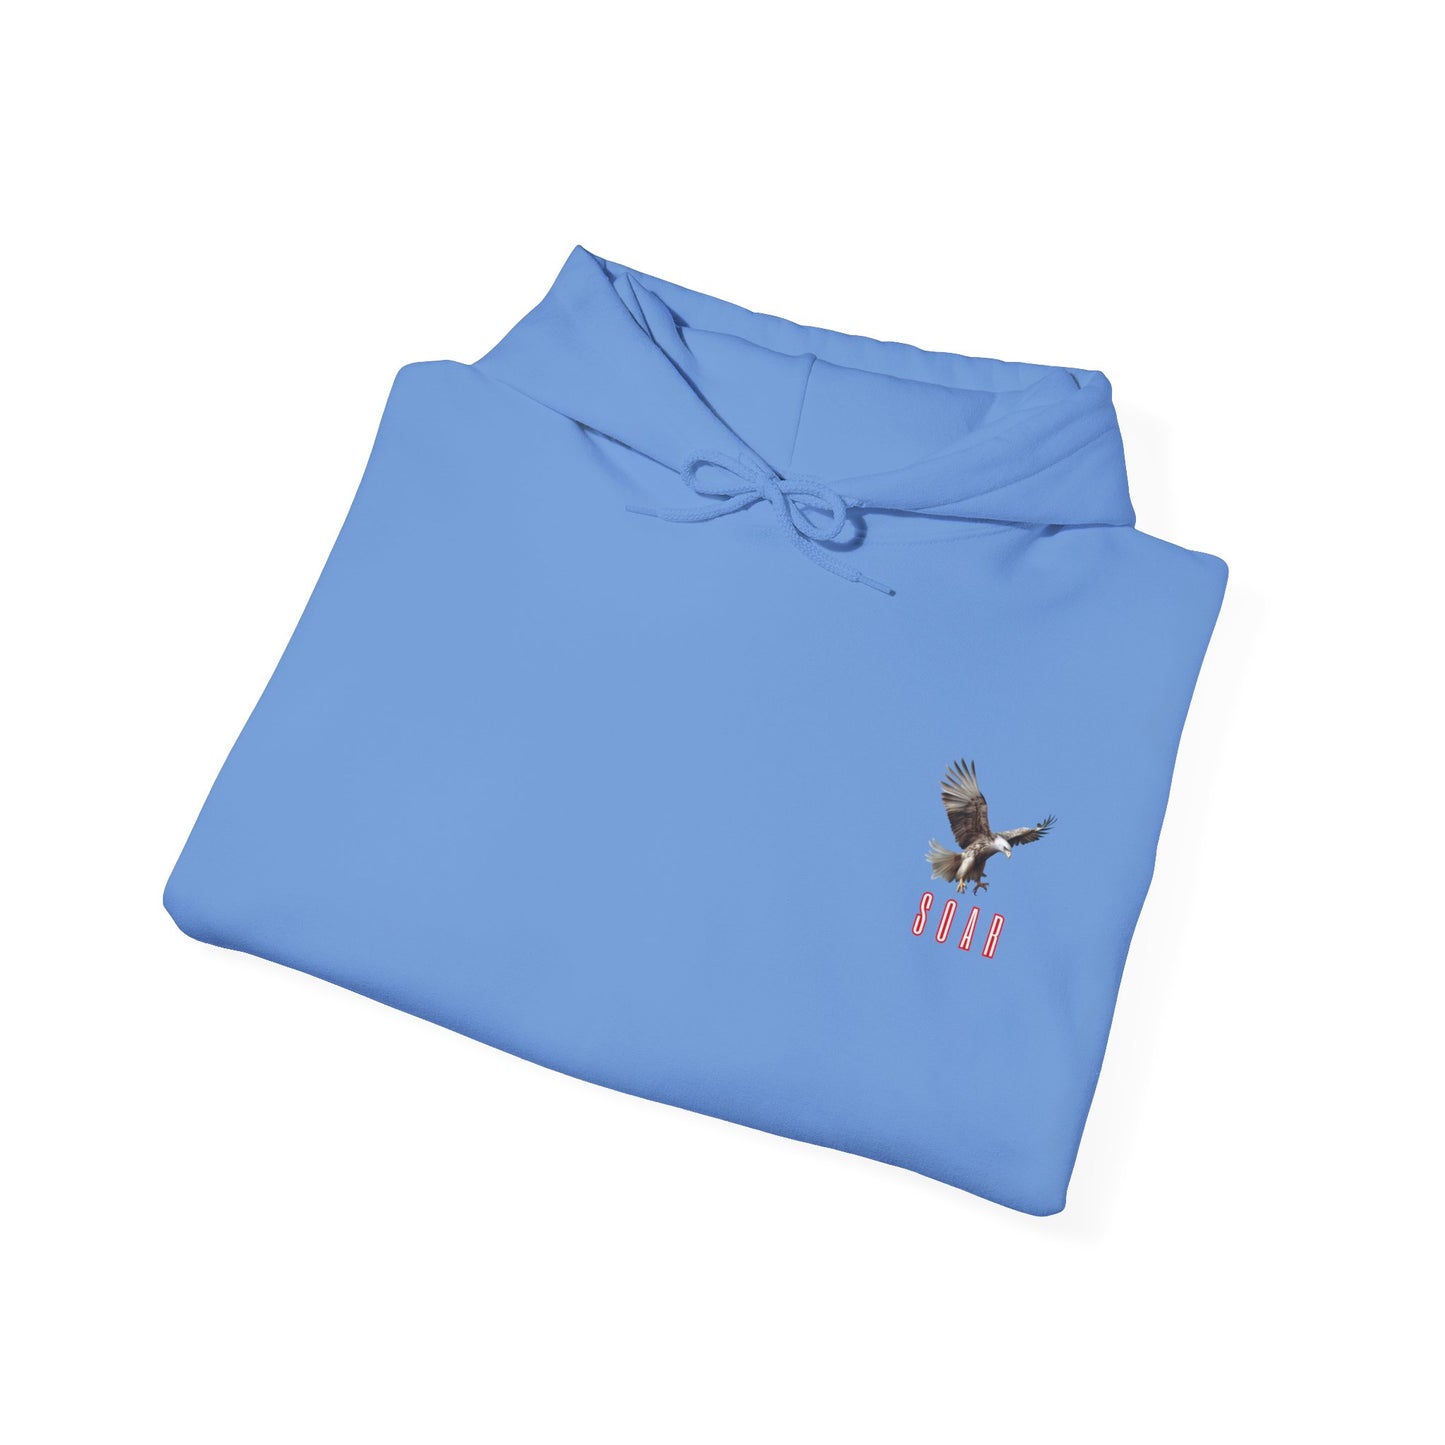 Unisex Heavy Blend™ Hooded Graphic Design (SOAR) Sweatshirt